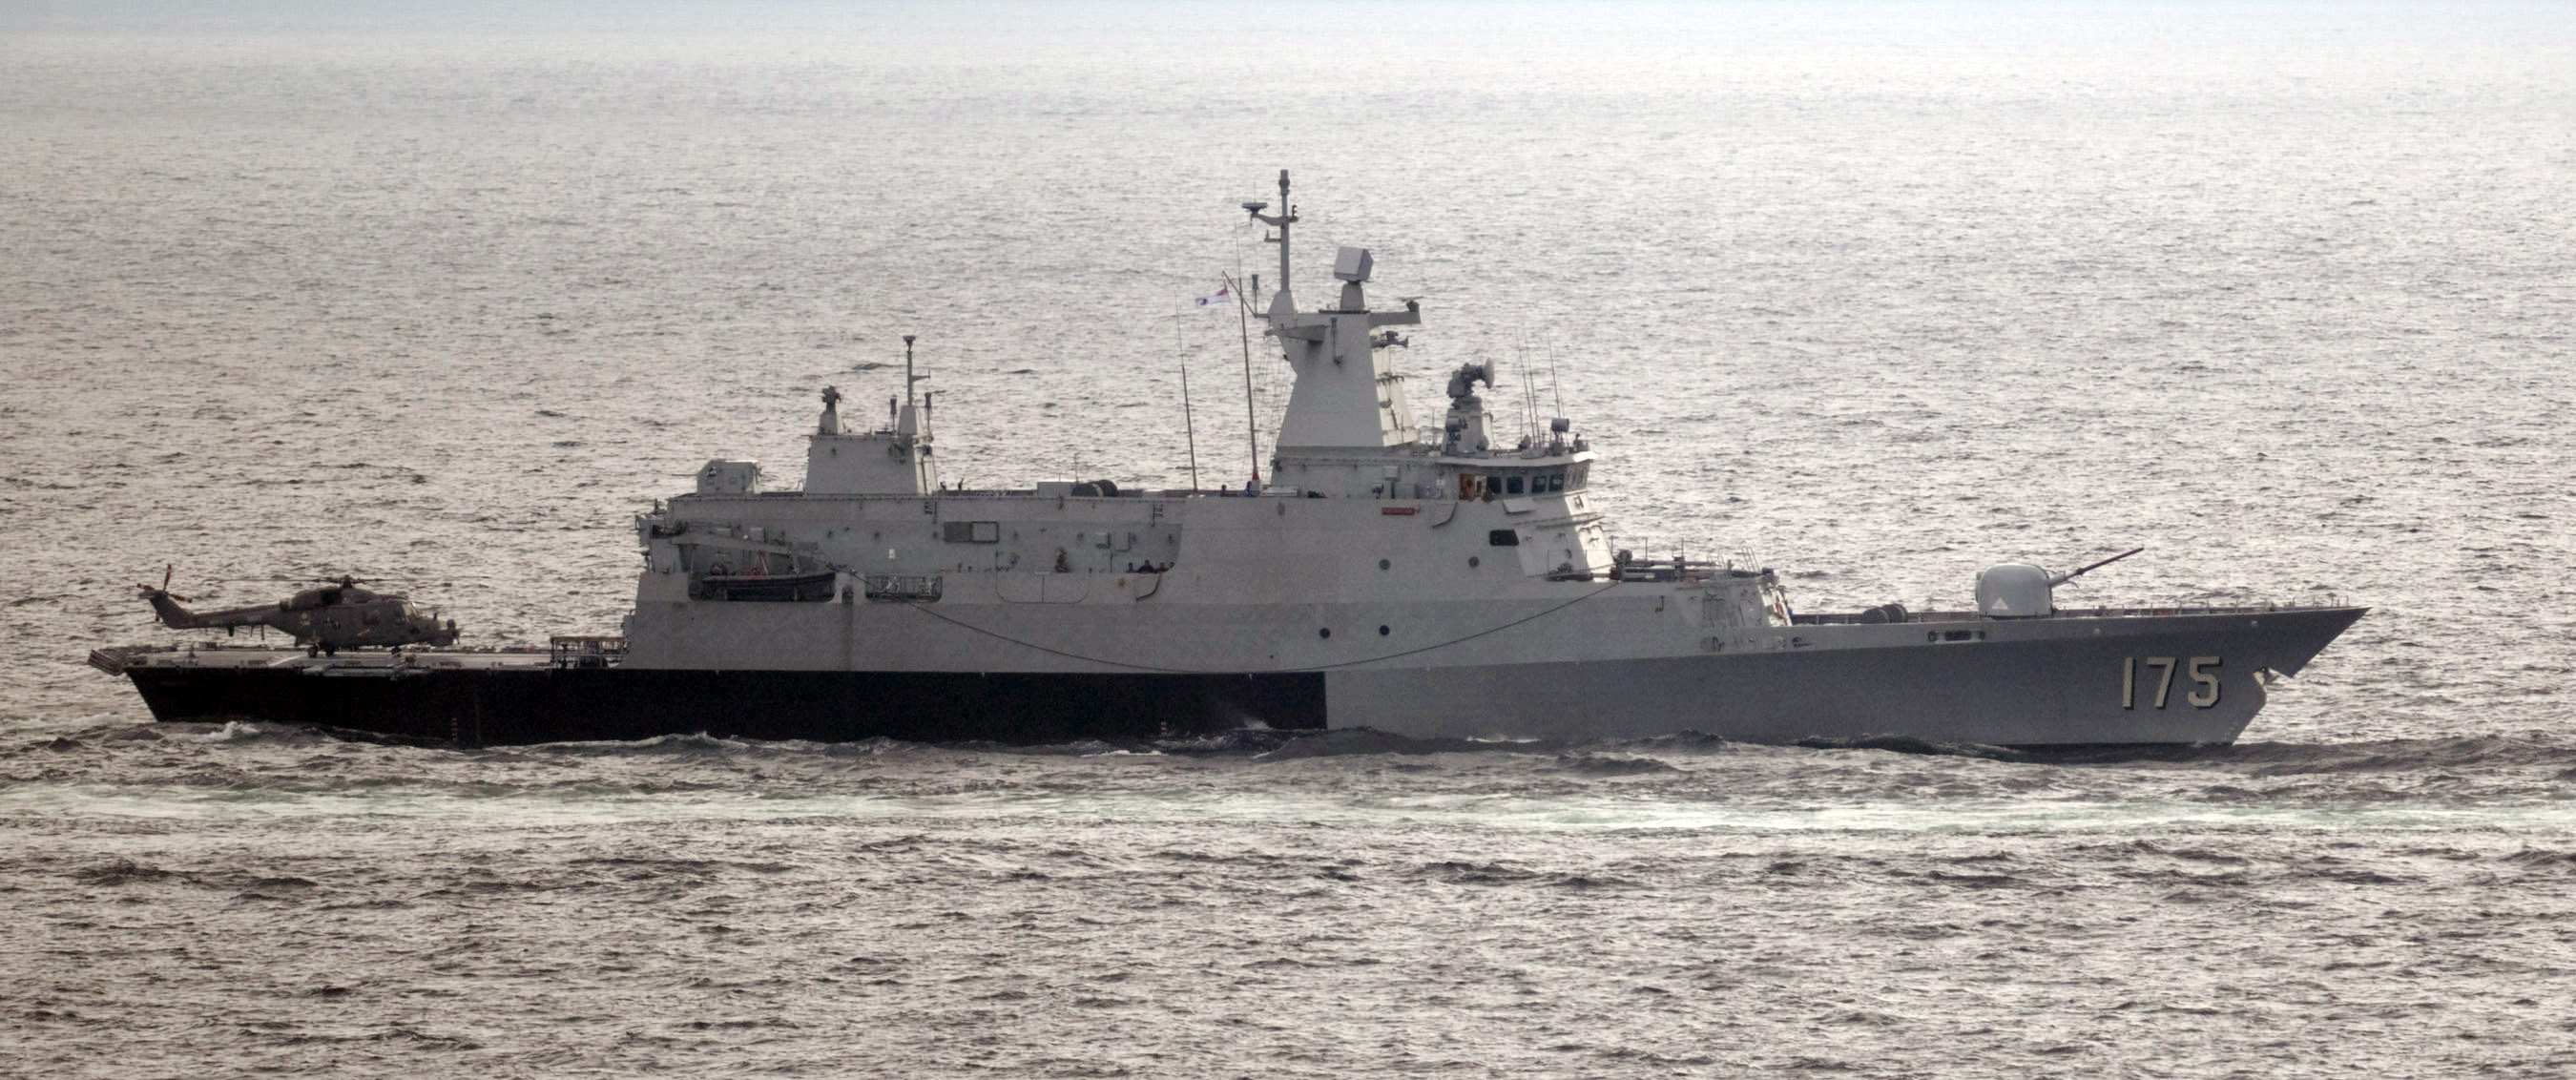 US_Navy_110126-N-6320L-821_The_Royal_Malaysian_Navy_corvette_KD_Kelantan_(175)_is_underway_in_the_Strait_of_Malacca.jpg